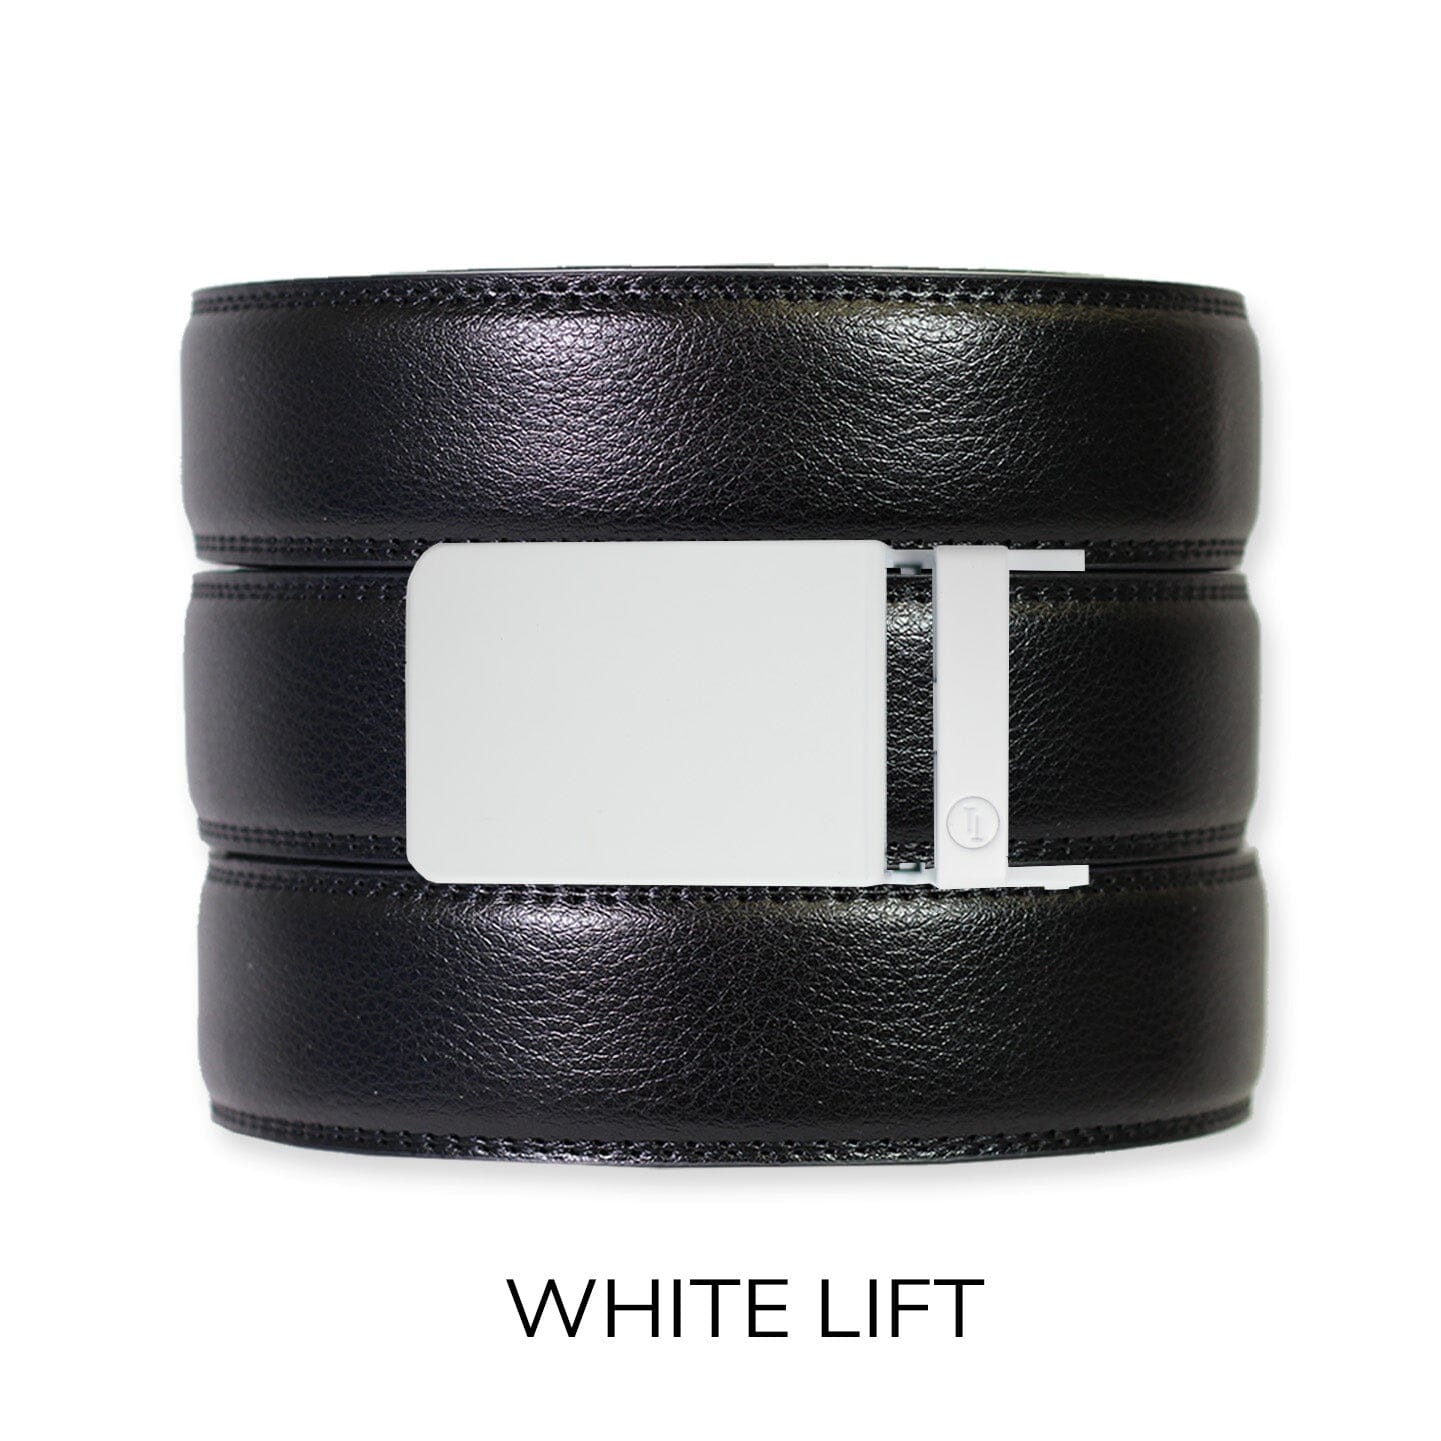 Black Leather Ratchet Belt & Buckle Set